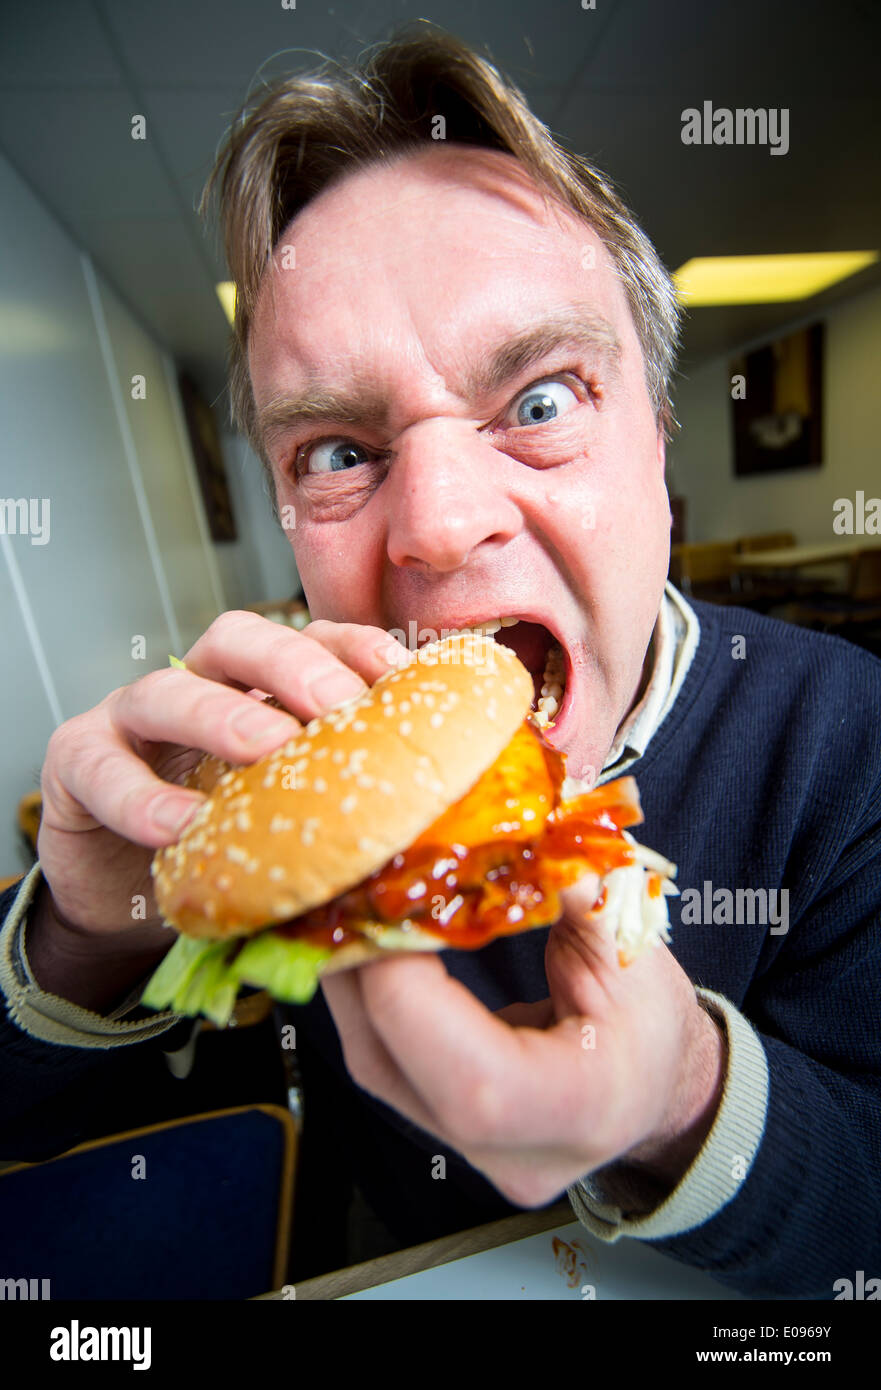 A man biting aggressively into a burger. Eating a burger Stock Photo